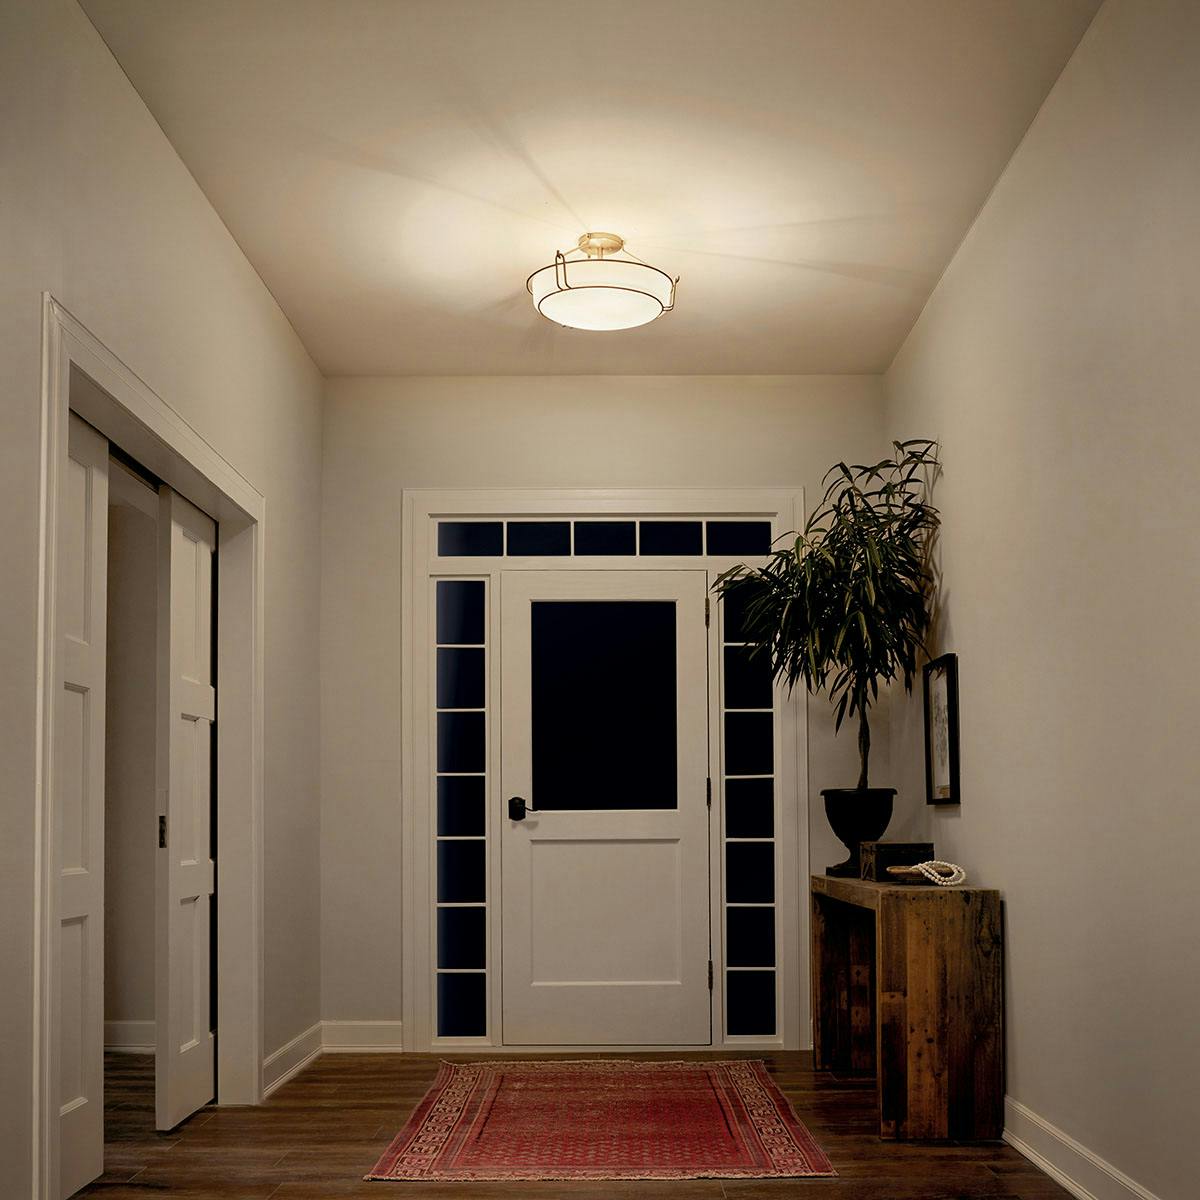 Night time Hallway image featuring Alkire flush mount light 44086NI